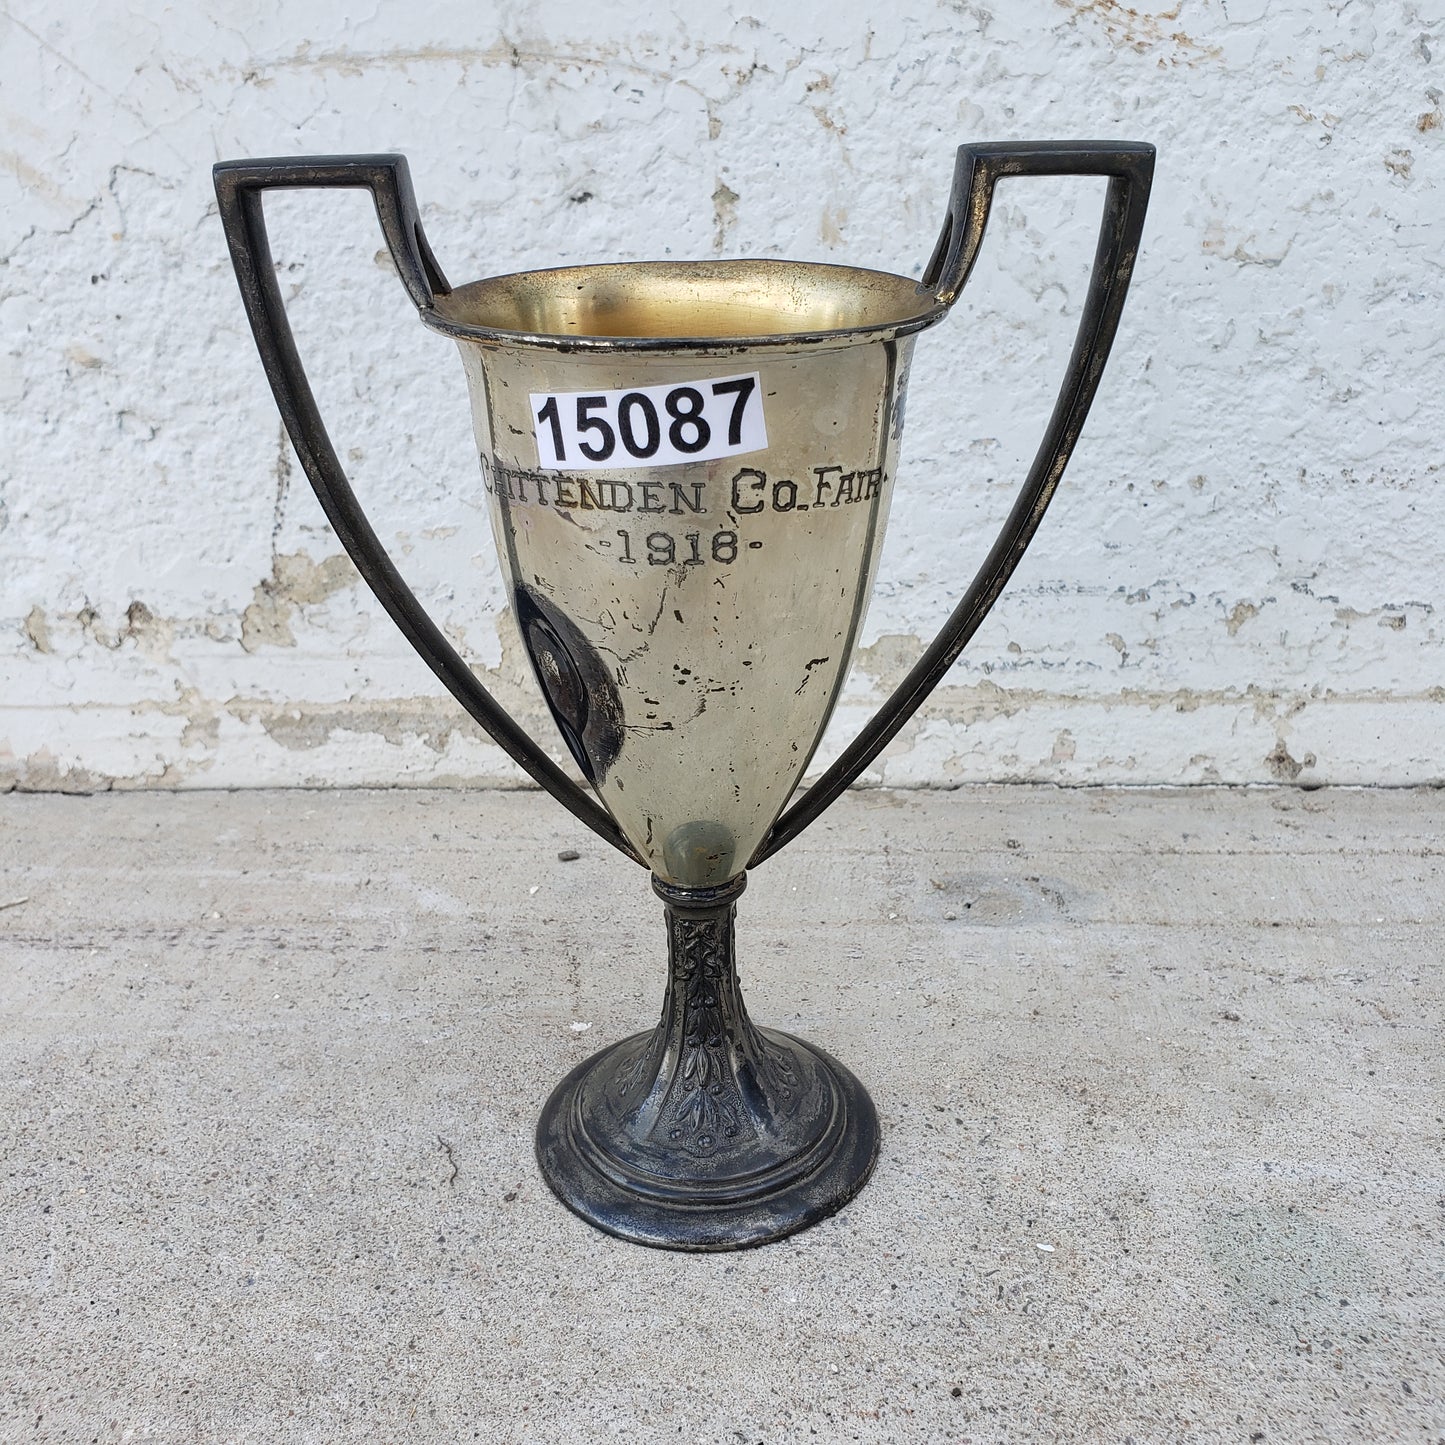 Chittenden Co fair 1918 Trophy